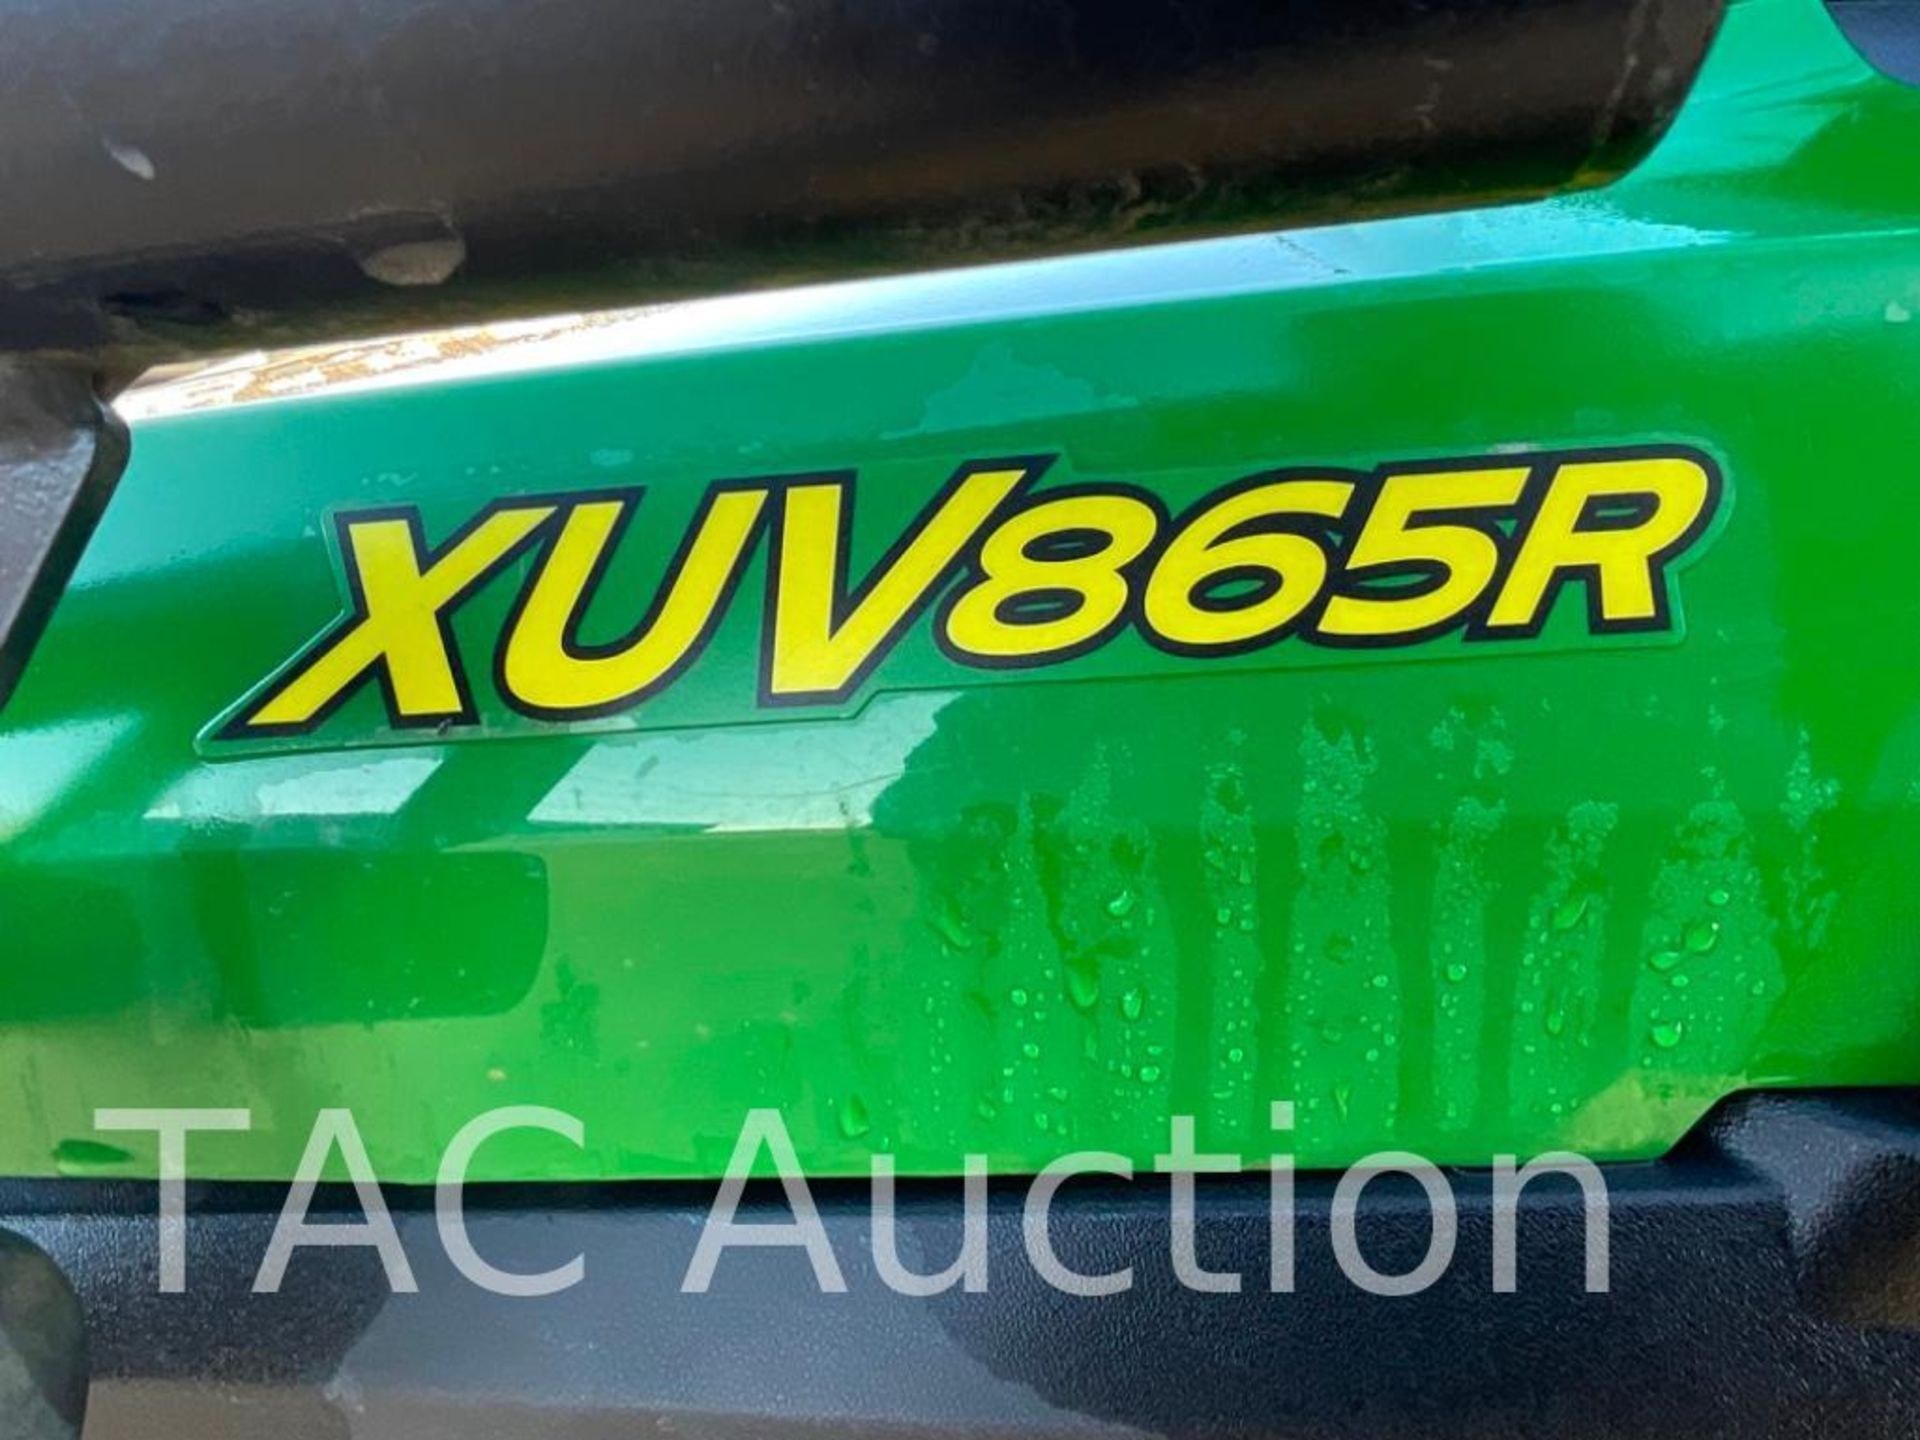 2023 John Deere Gator XUV865R 4x4 Side X Side - Image 9 of 42